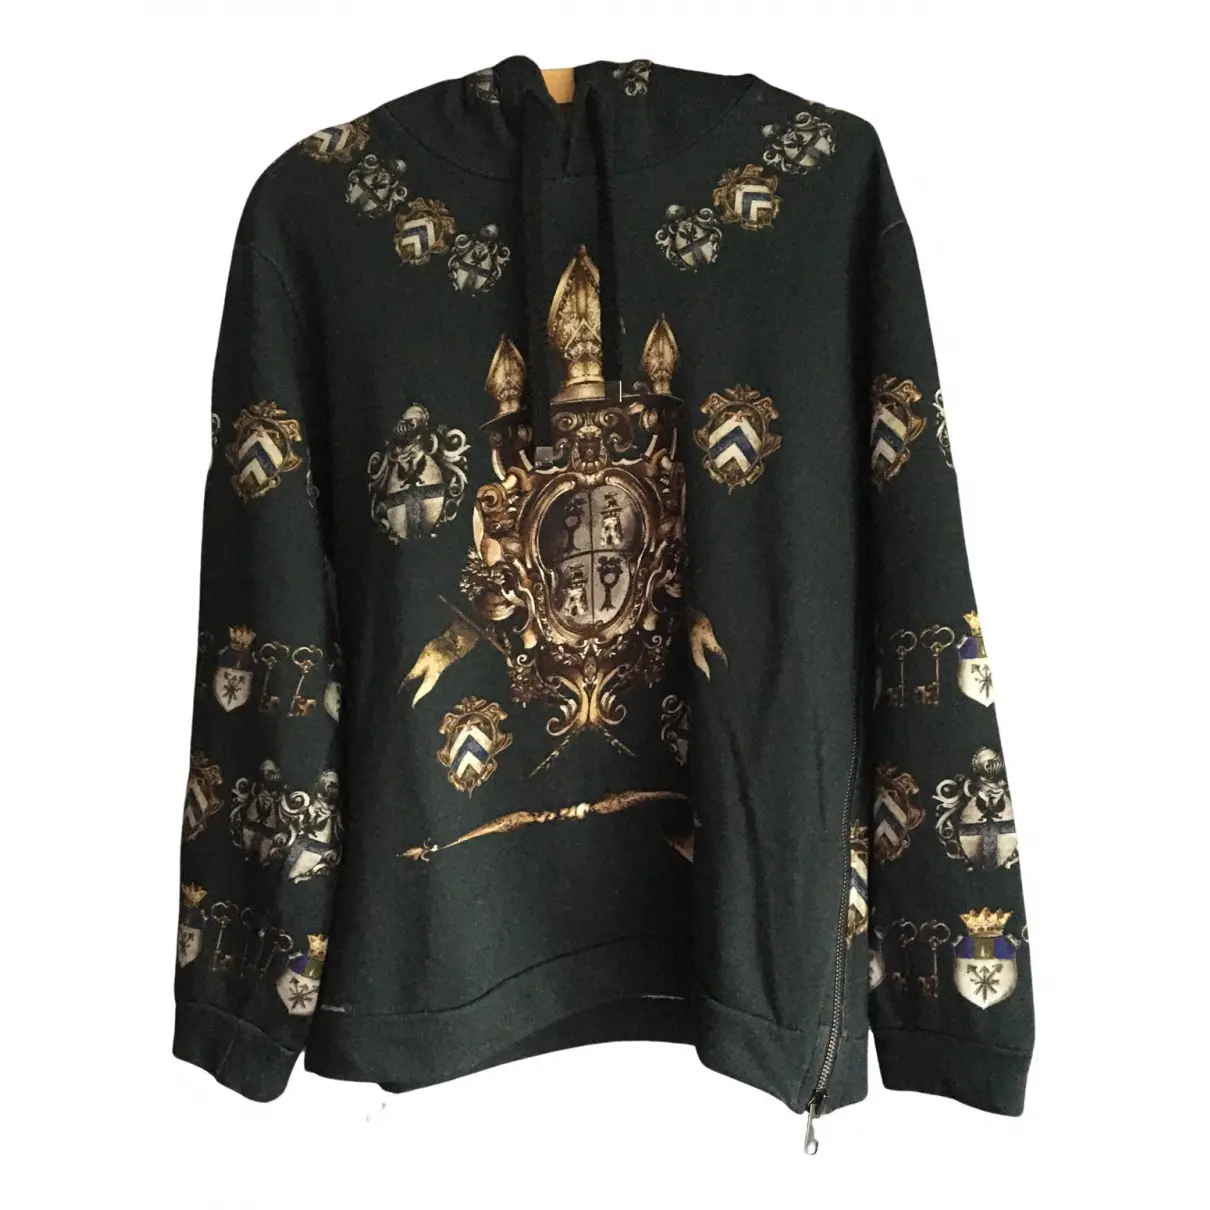 Sweatshirt Dolce & Gabbana